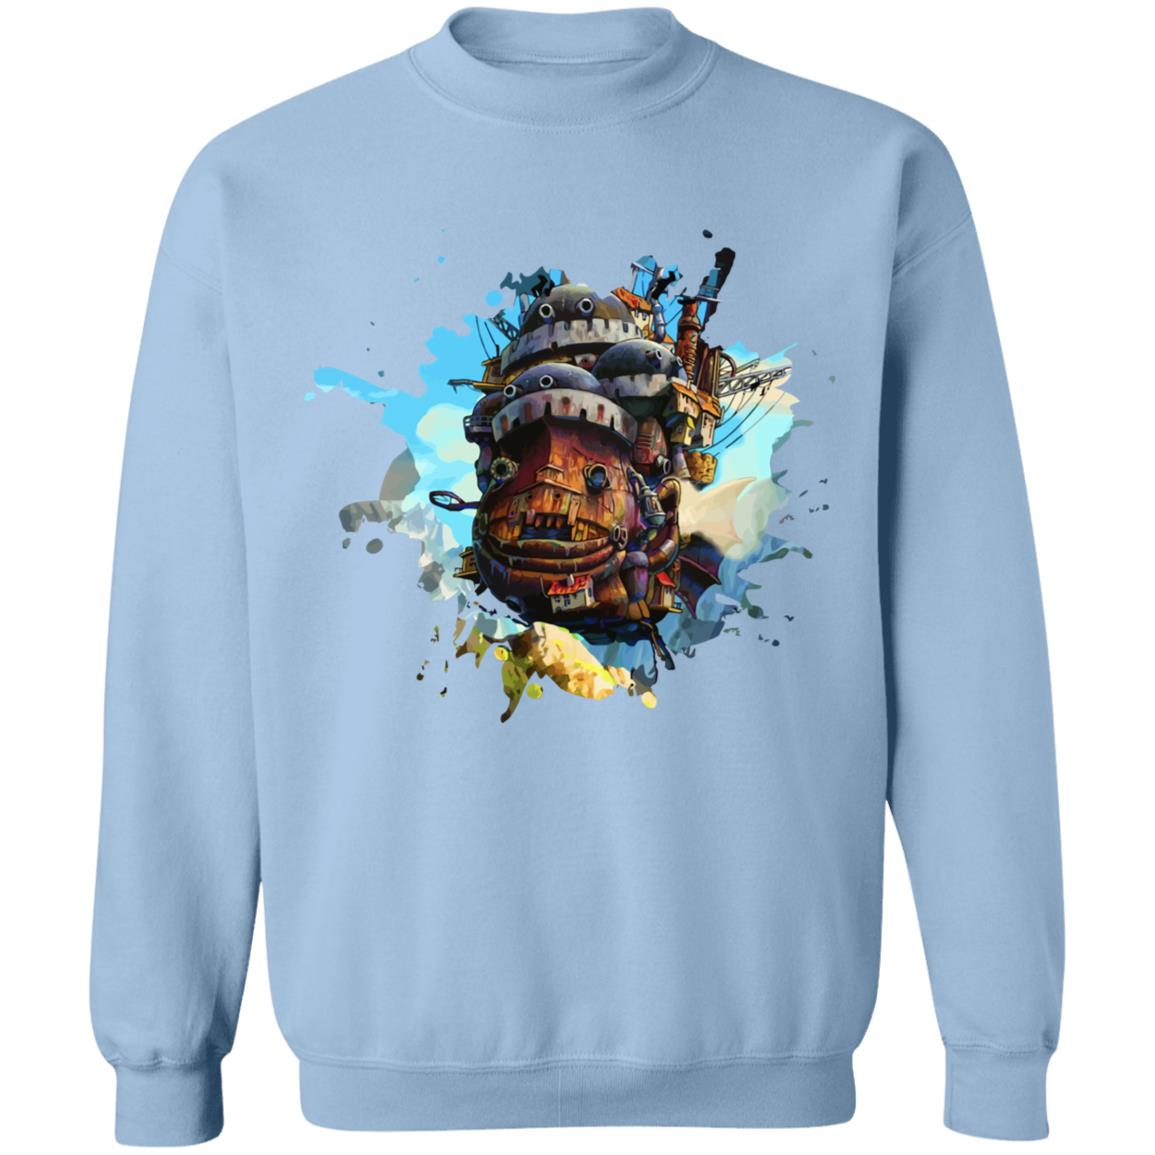 Howl’s Moving Castle Painting Sweatshirt